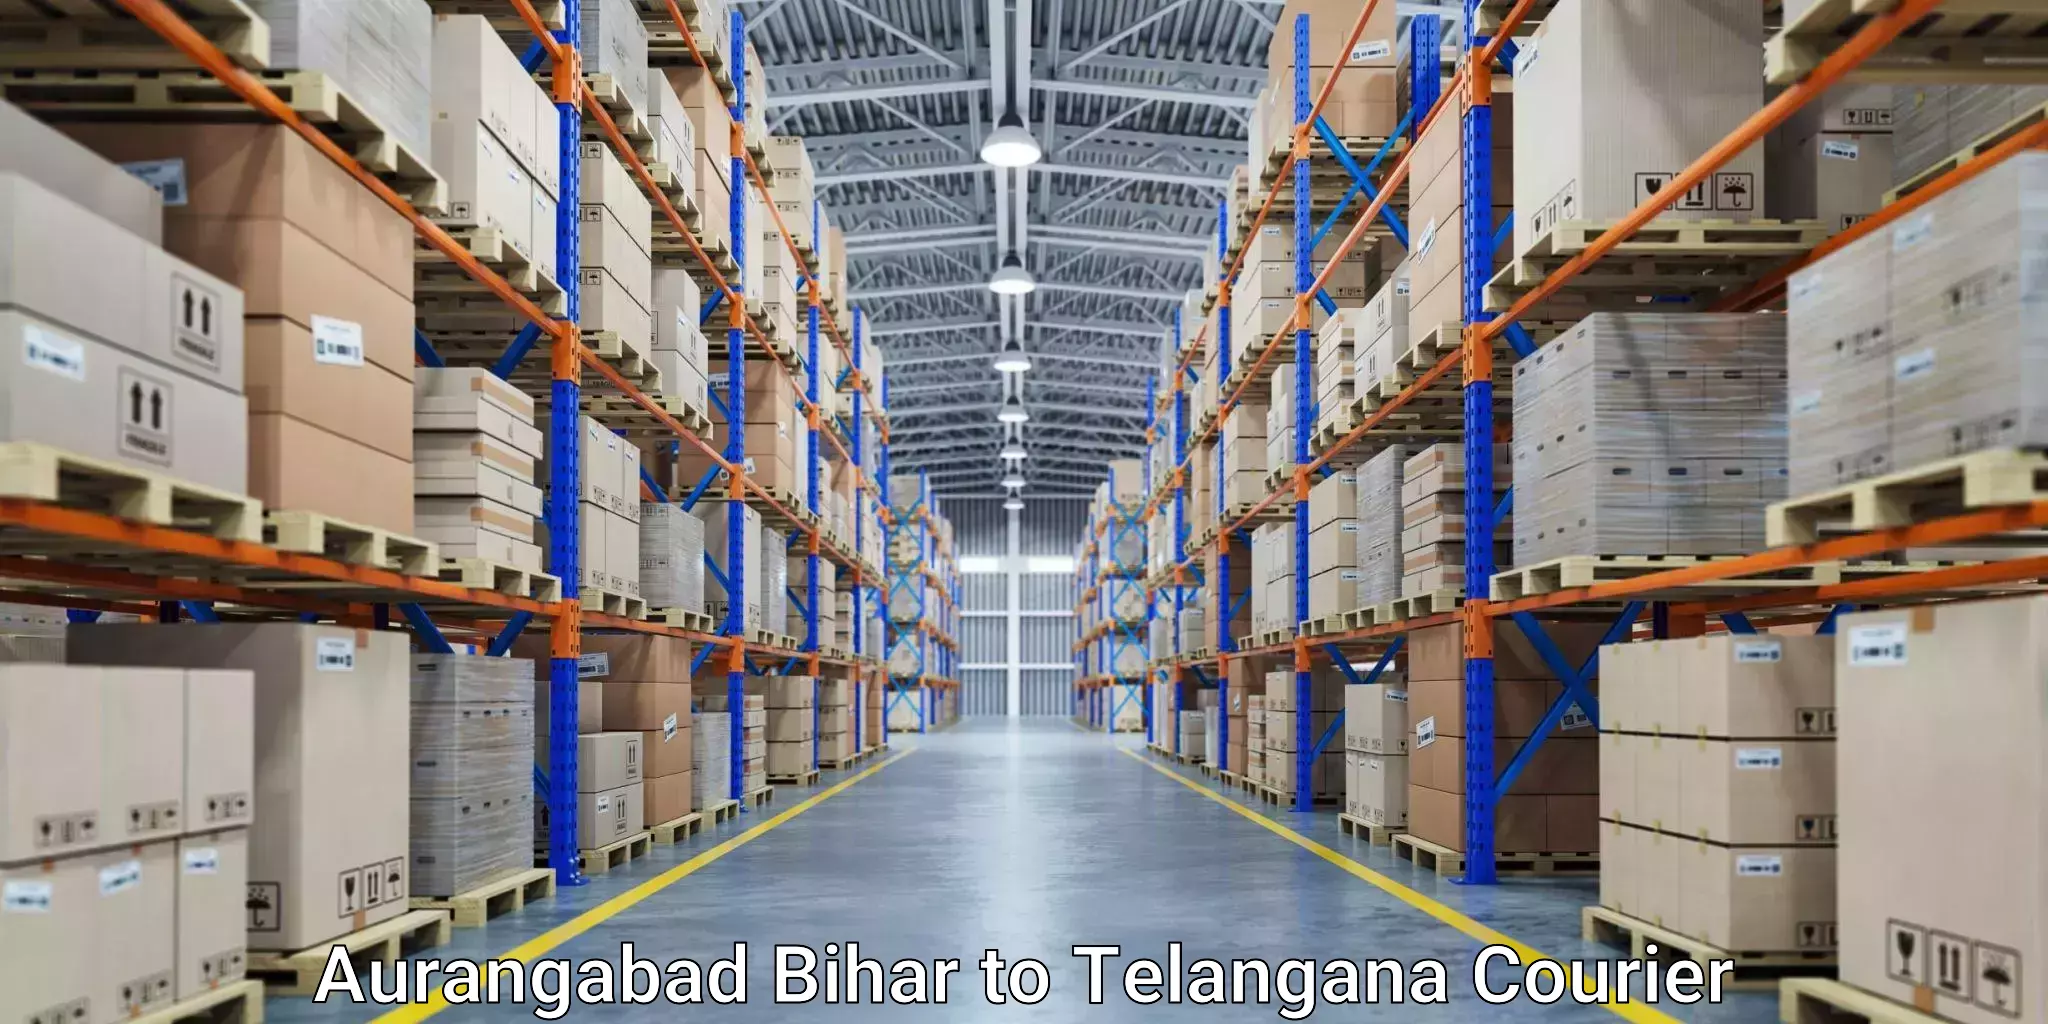 High-priority parcel service Aurangabad Bihar to Tallada